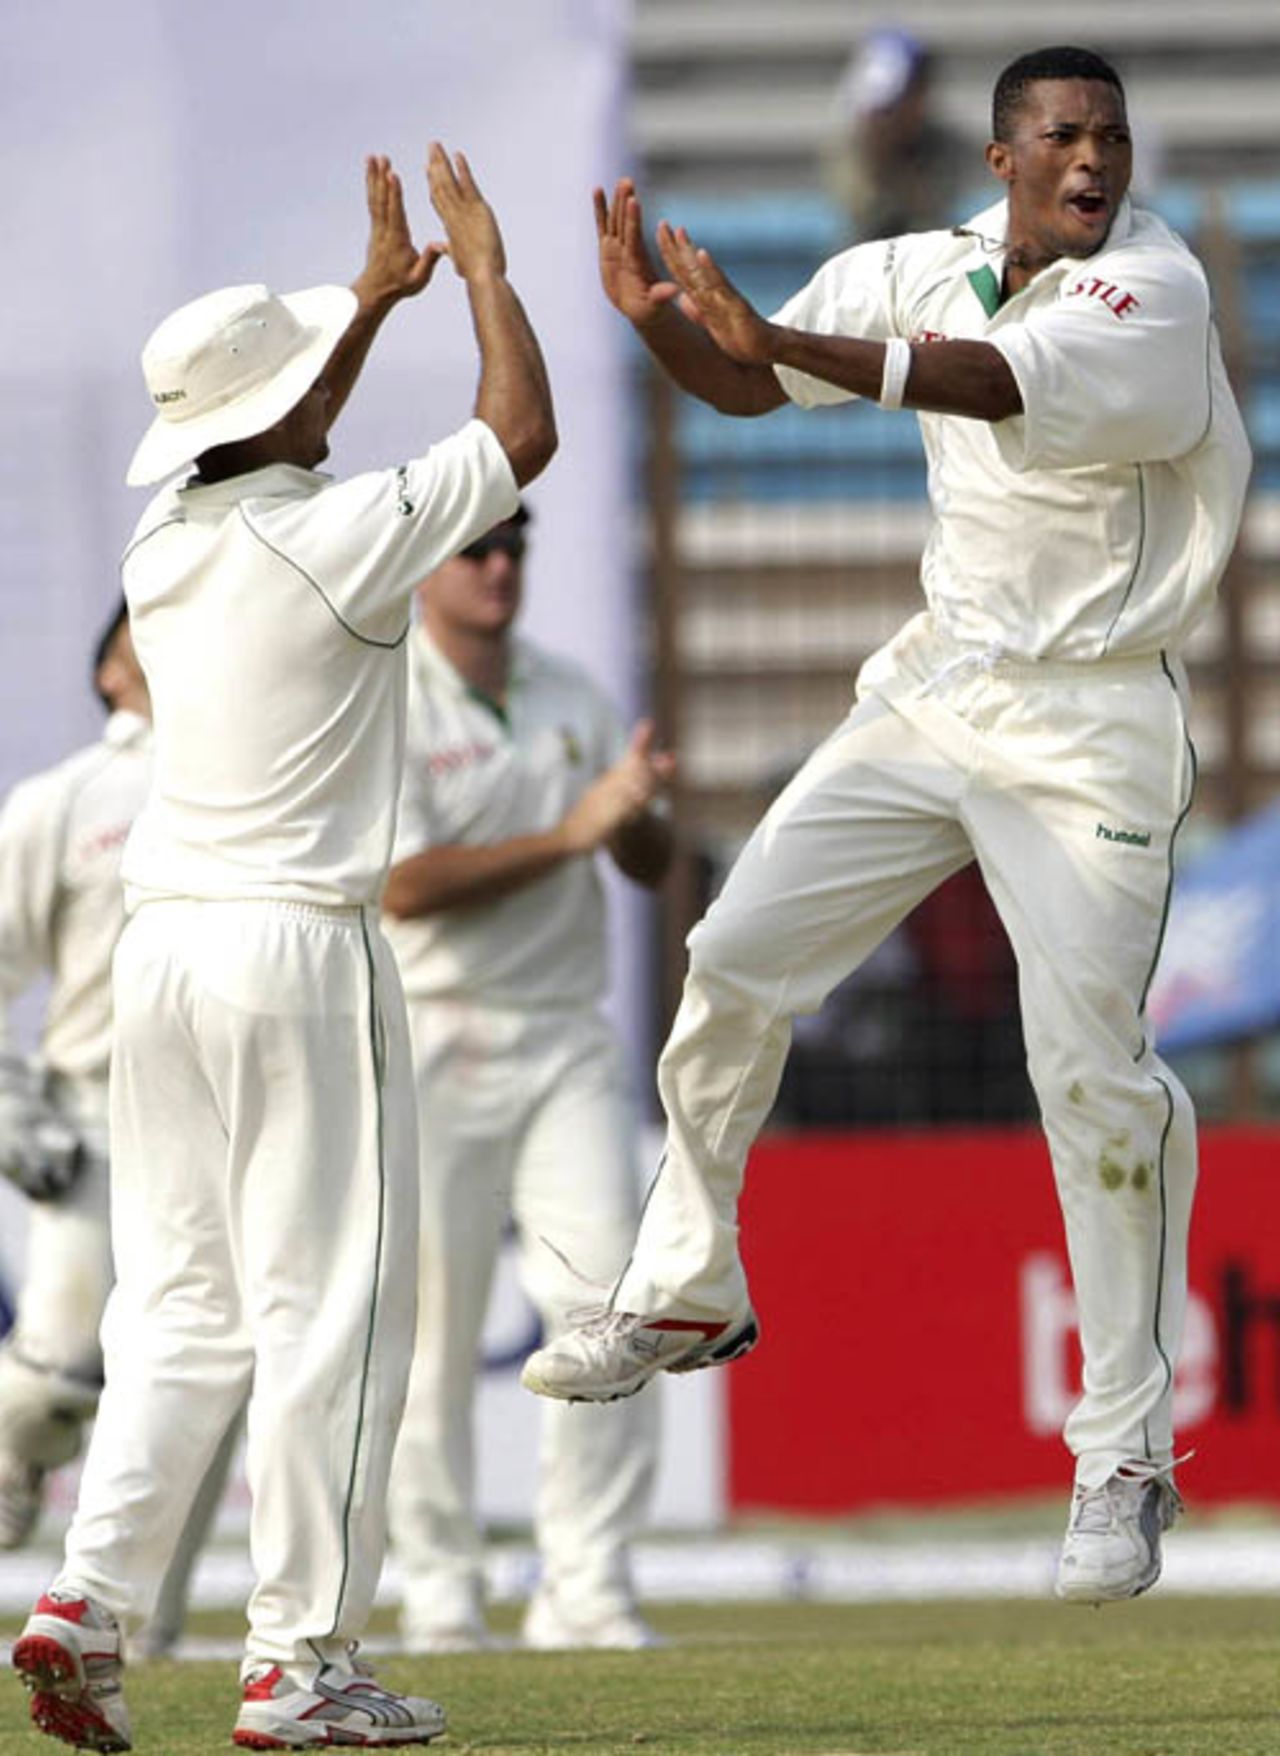 Makhaya Ntini celebrates the wicket of Mashrafe Mortaza, Bangladesh v South Africa, 2nd Test, Chittagong, 3rd day, March 2, 2008 